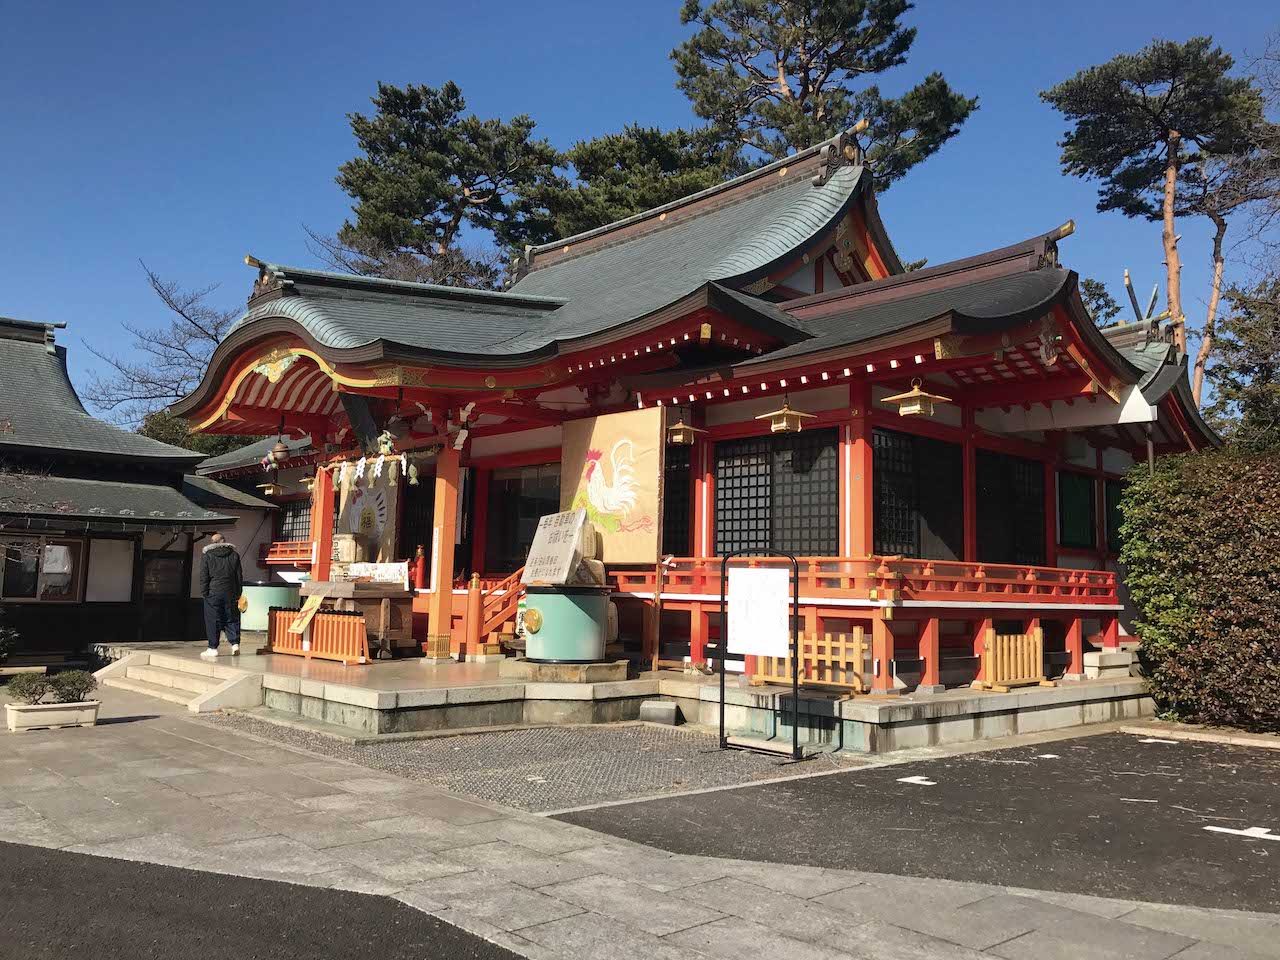 Tachikawa City - Temples & Shrines - Culture - Japan Travel